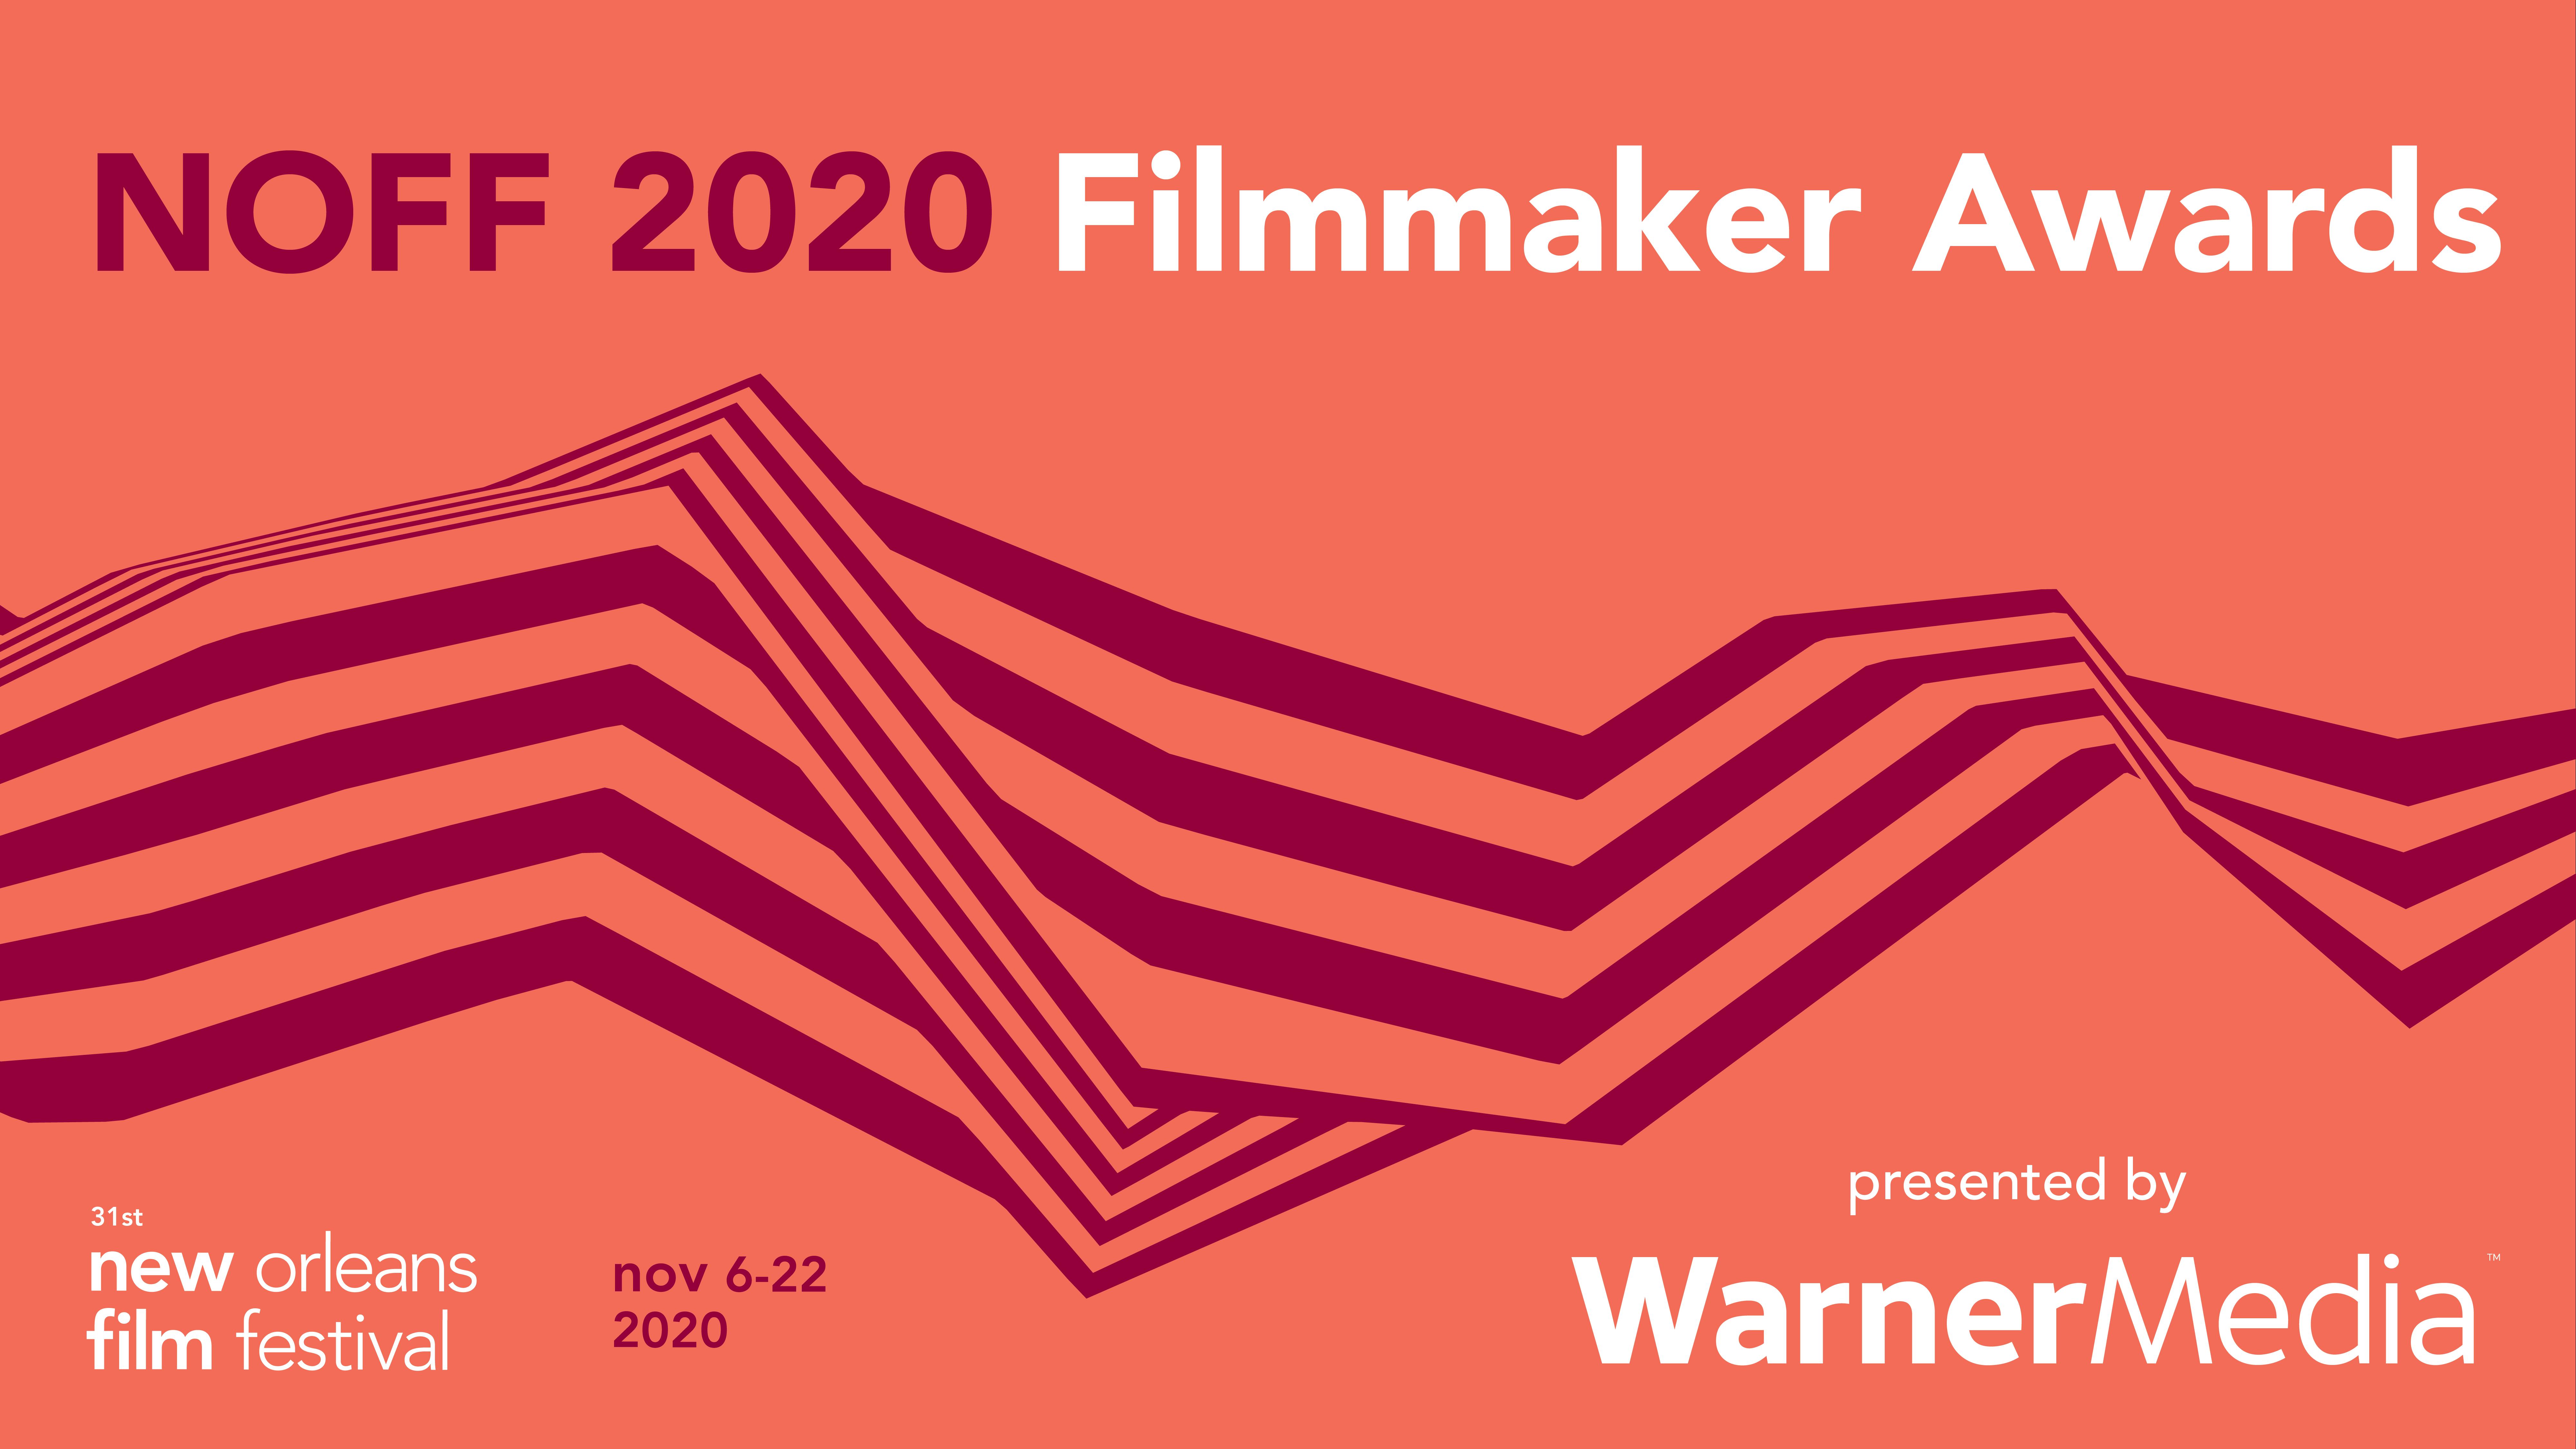 NOFF2020 Filmmaker Awards presented by WarnerMedia